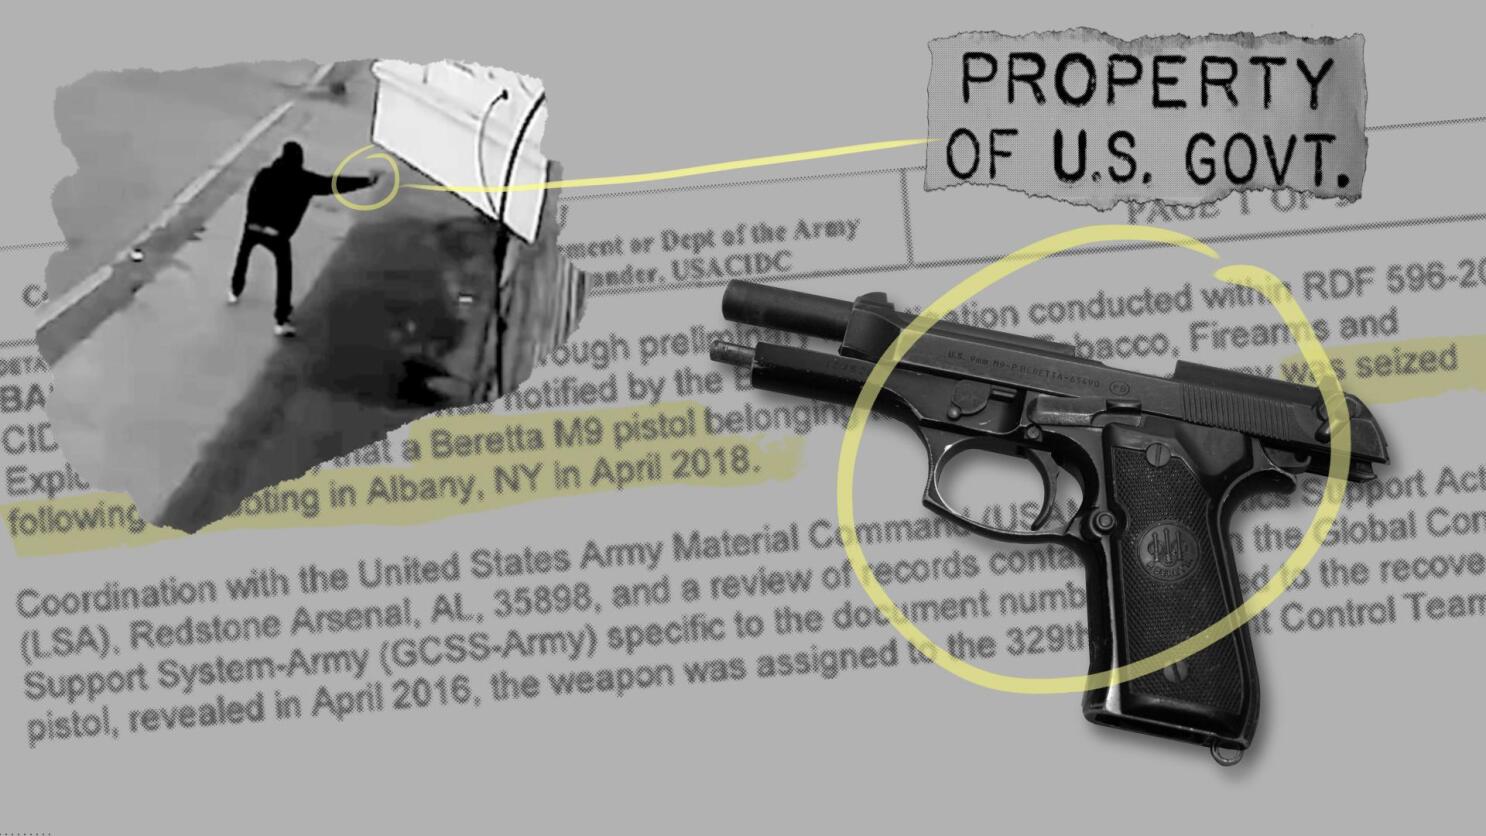 New York City Sells Police's Spent Gun Shell Casings to Georgia